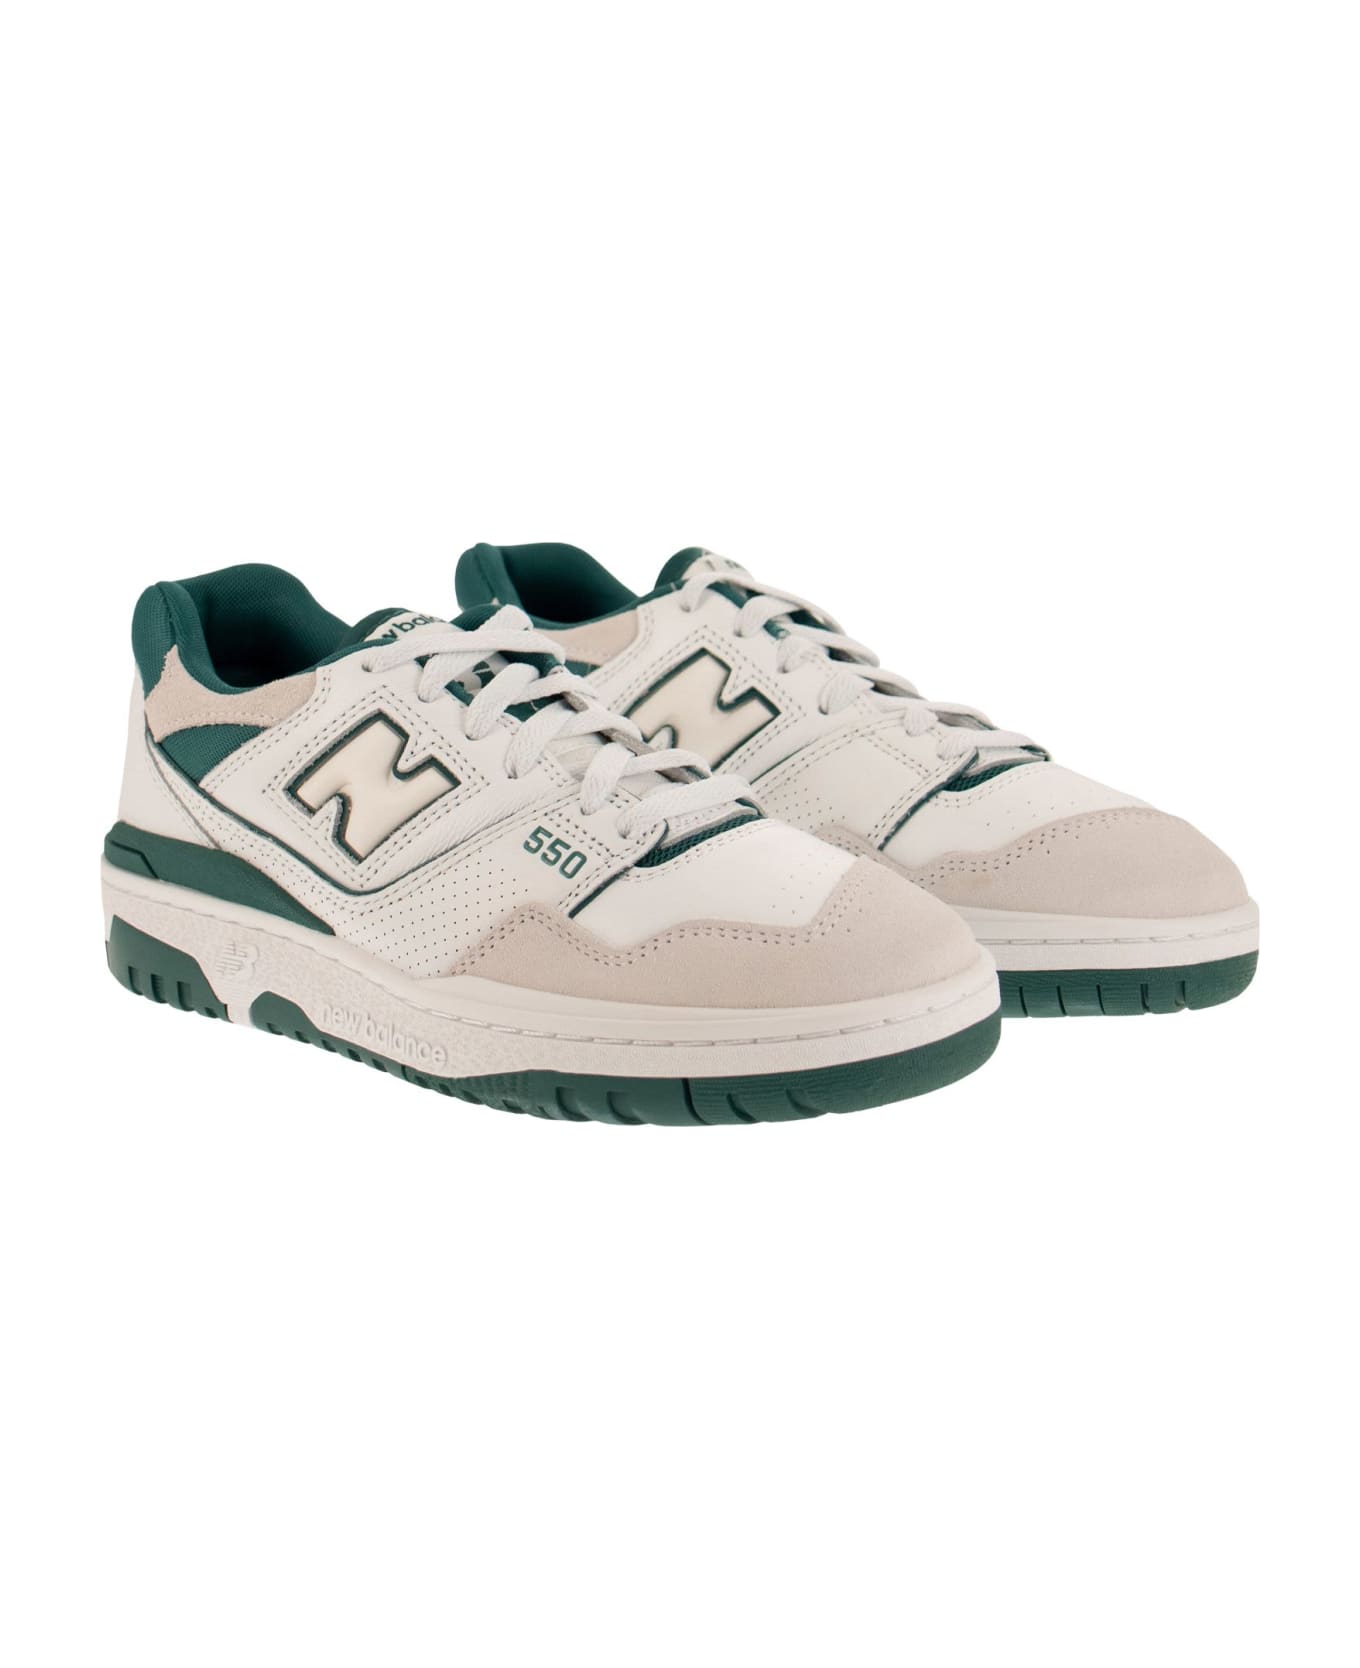 New Balance Bb550 - Sneakers - White/green